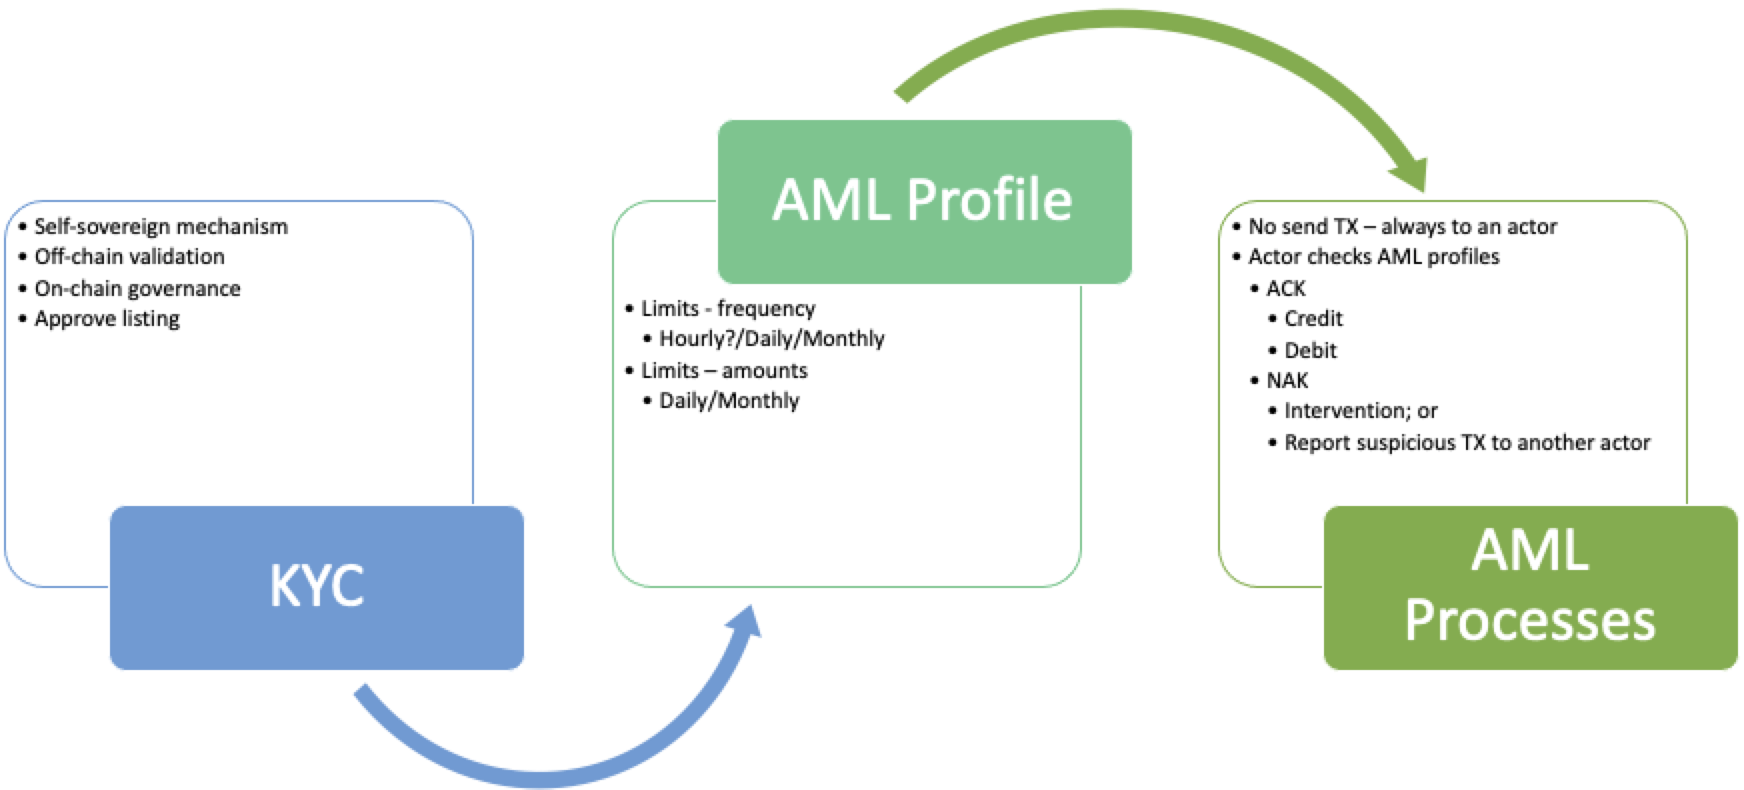 AML Process with AML profiles (courtesy: Martin Worner)